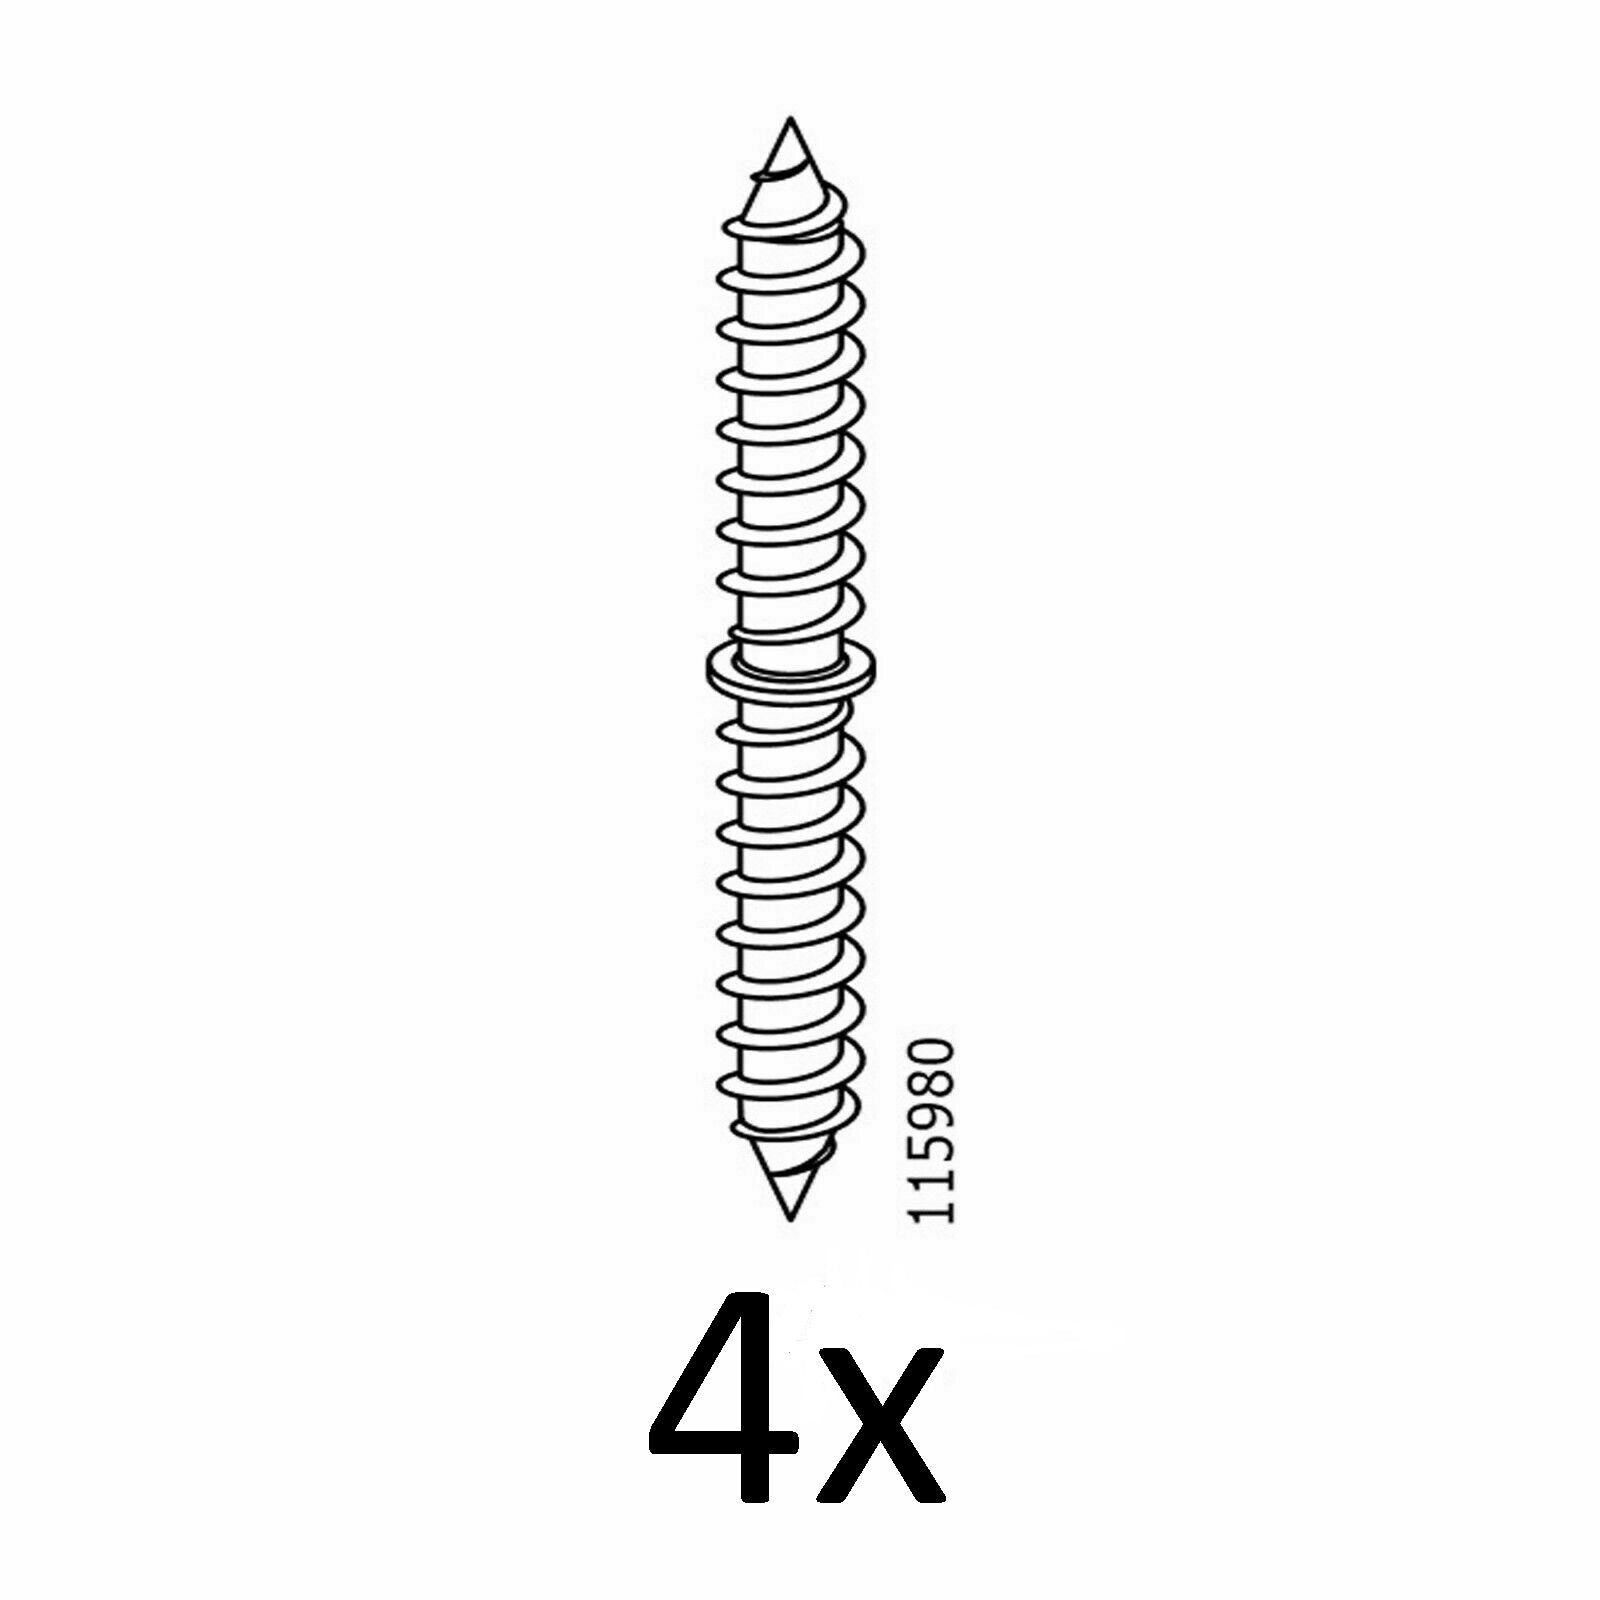 IKEA Screws (4 pack) Part # 115980 Furniture Hardware Fitting Parts